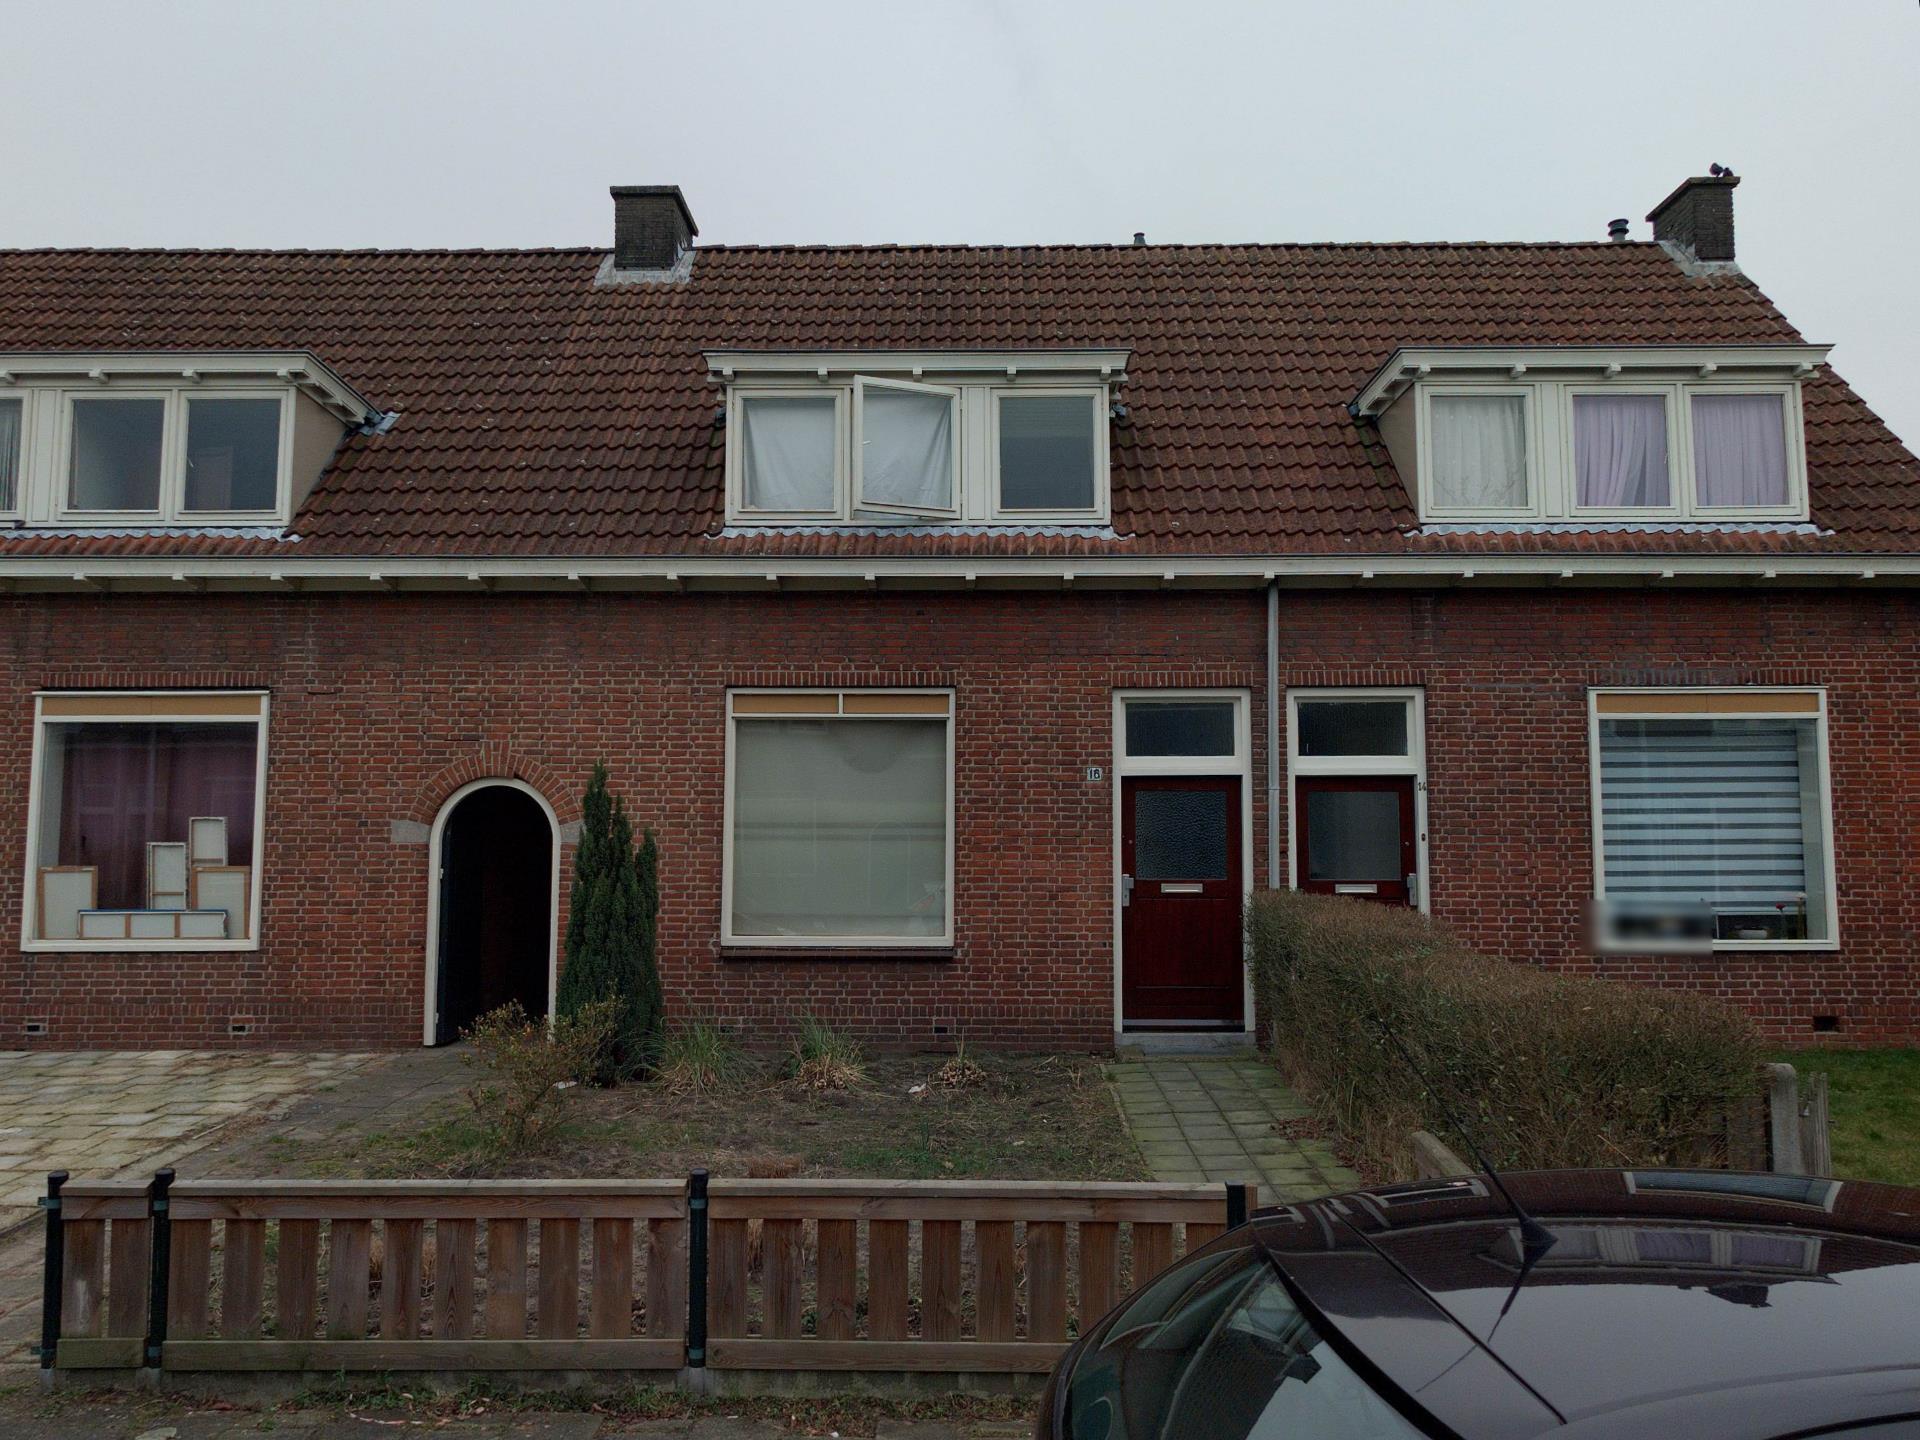 Stoopstraat 16, 4702 SR Roosendaal, Nederland